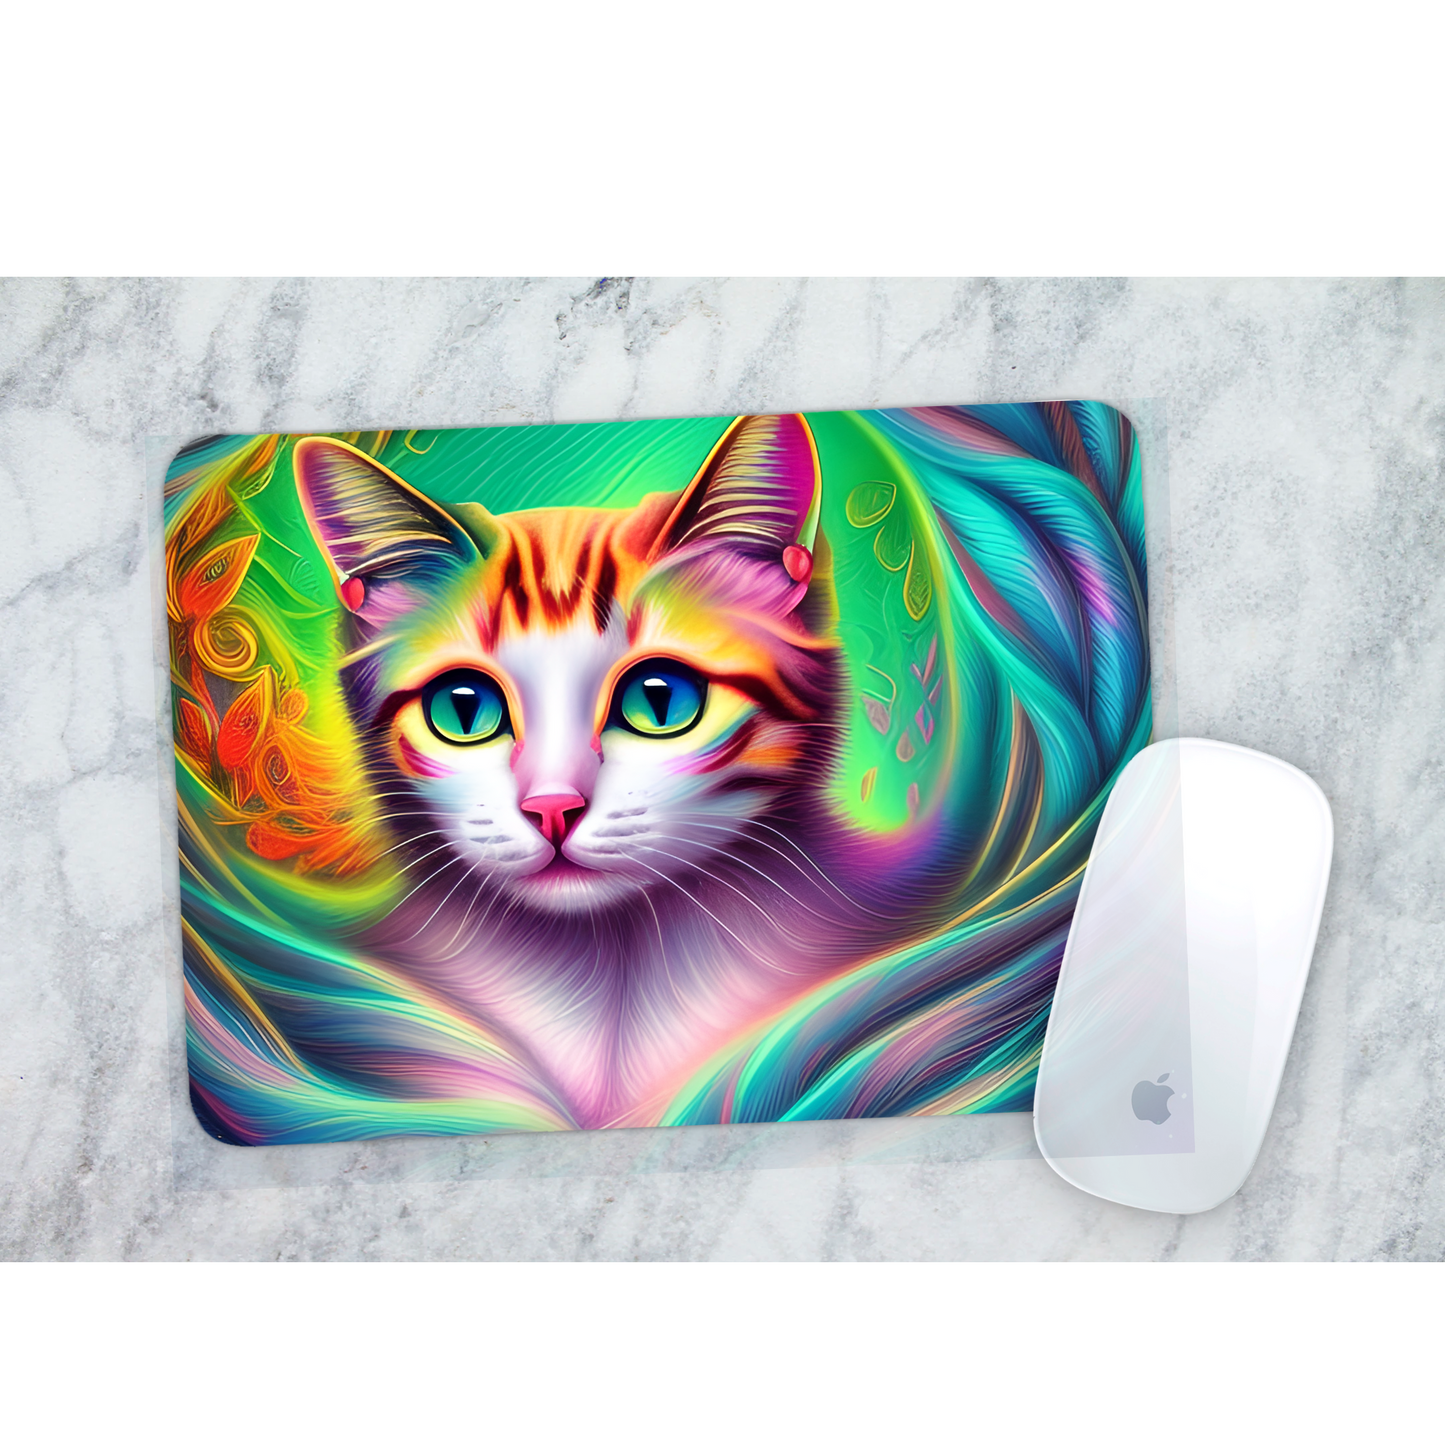 Premium Printed Anti-Slip Mouse Mat - Ultra Durable Intricate Cat Design